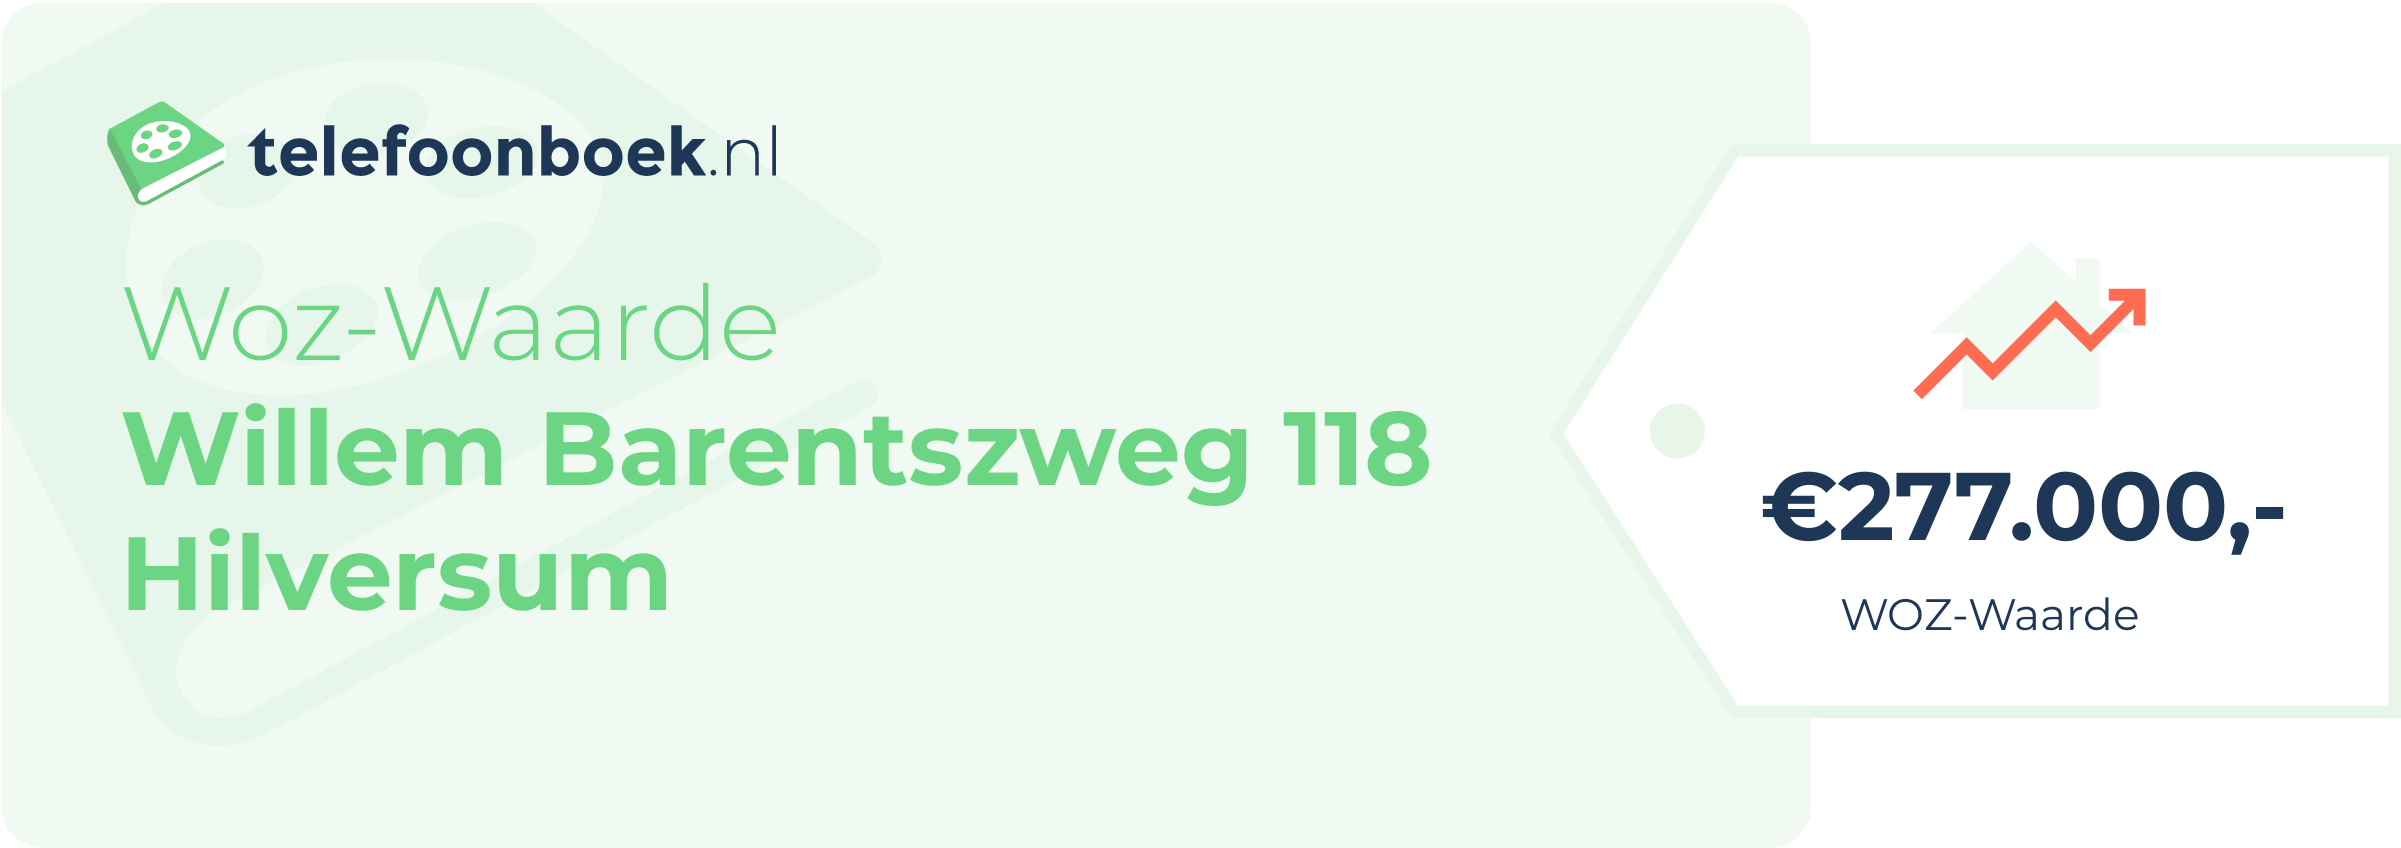 WOZ-waarde Willem Barentszweg 118 Hilversum